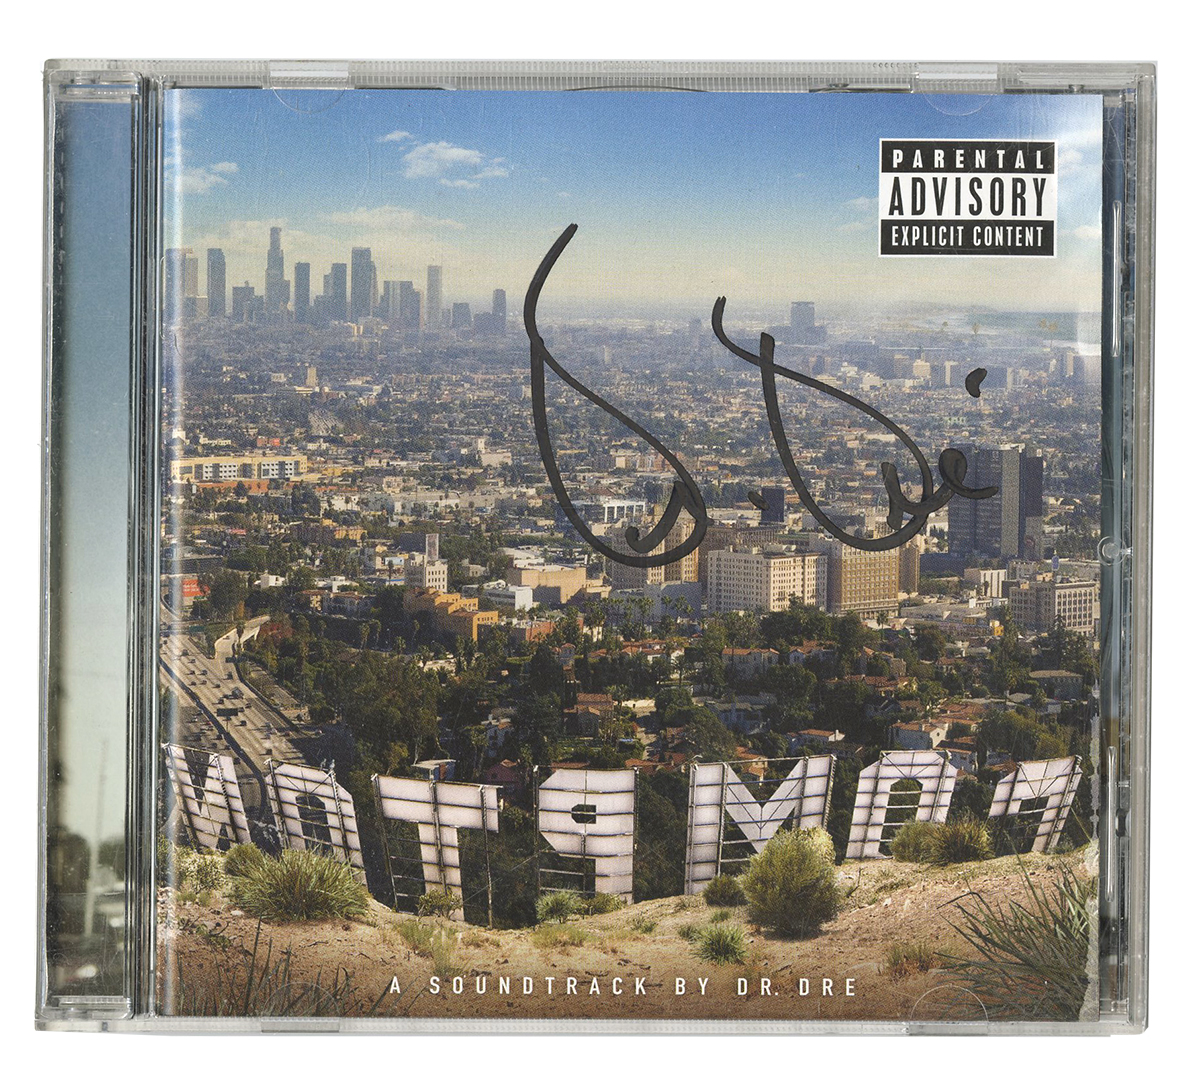 Lot - Dr. Dre “Compton: A Soundtrack by Dr. Dre” CD Cover